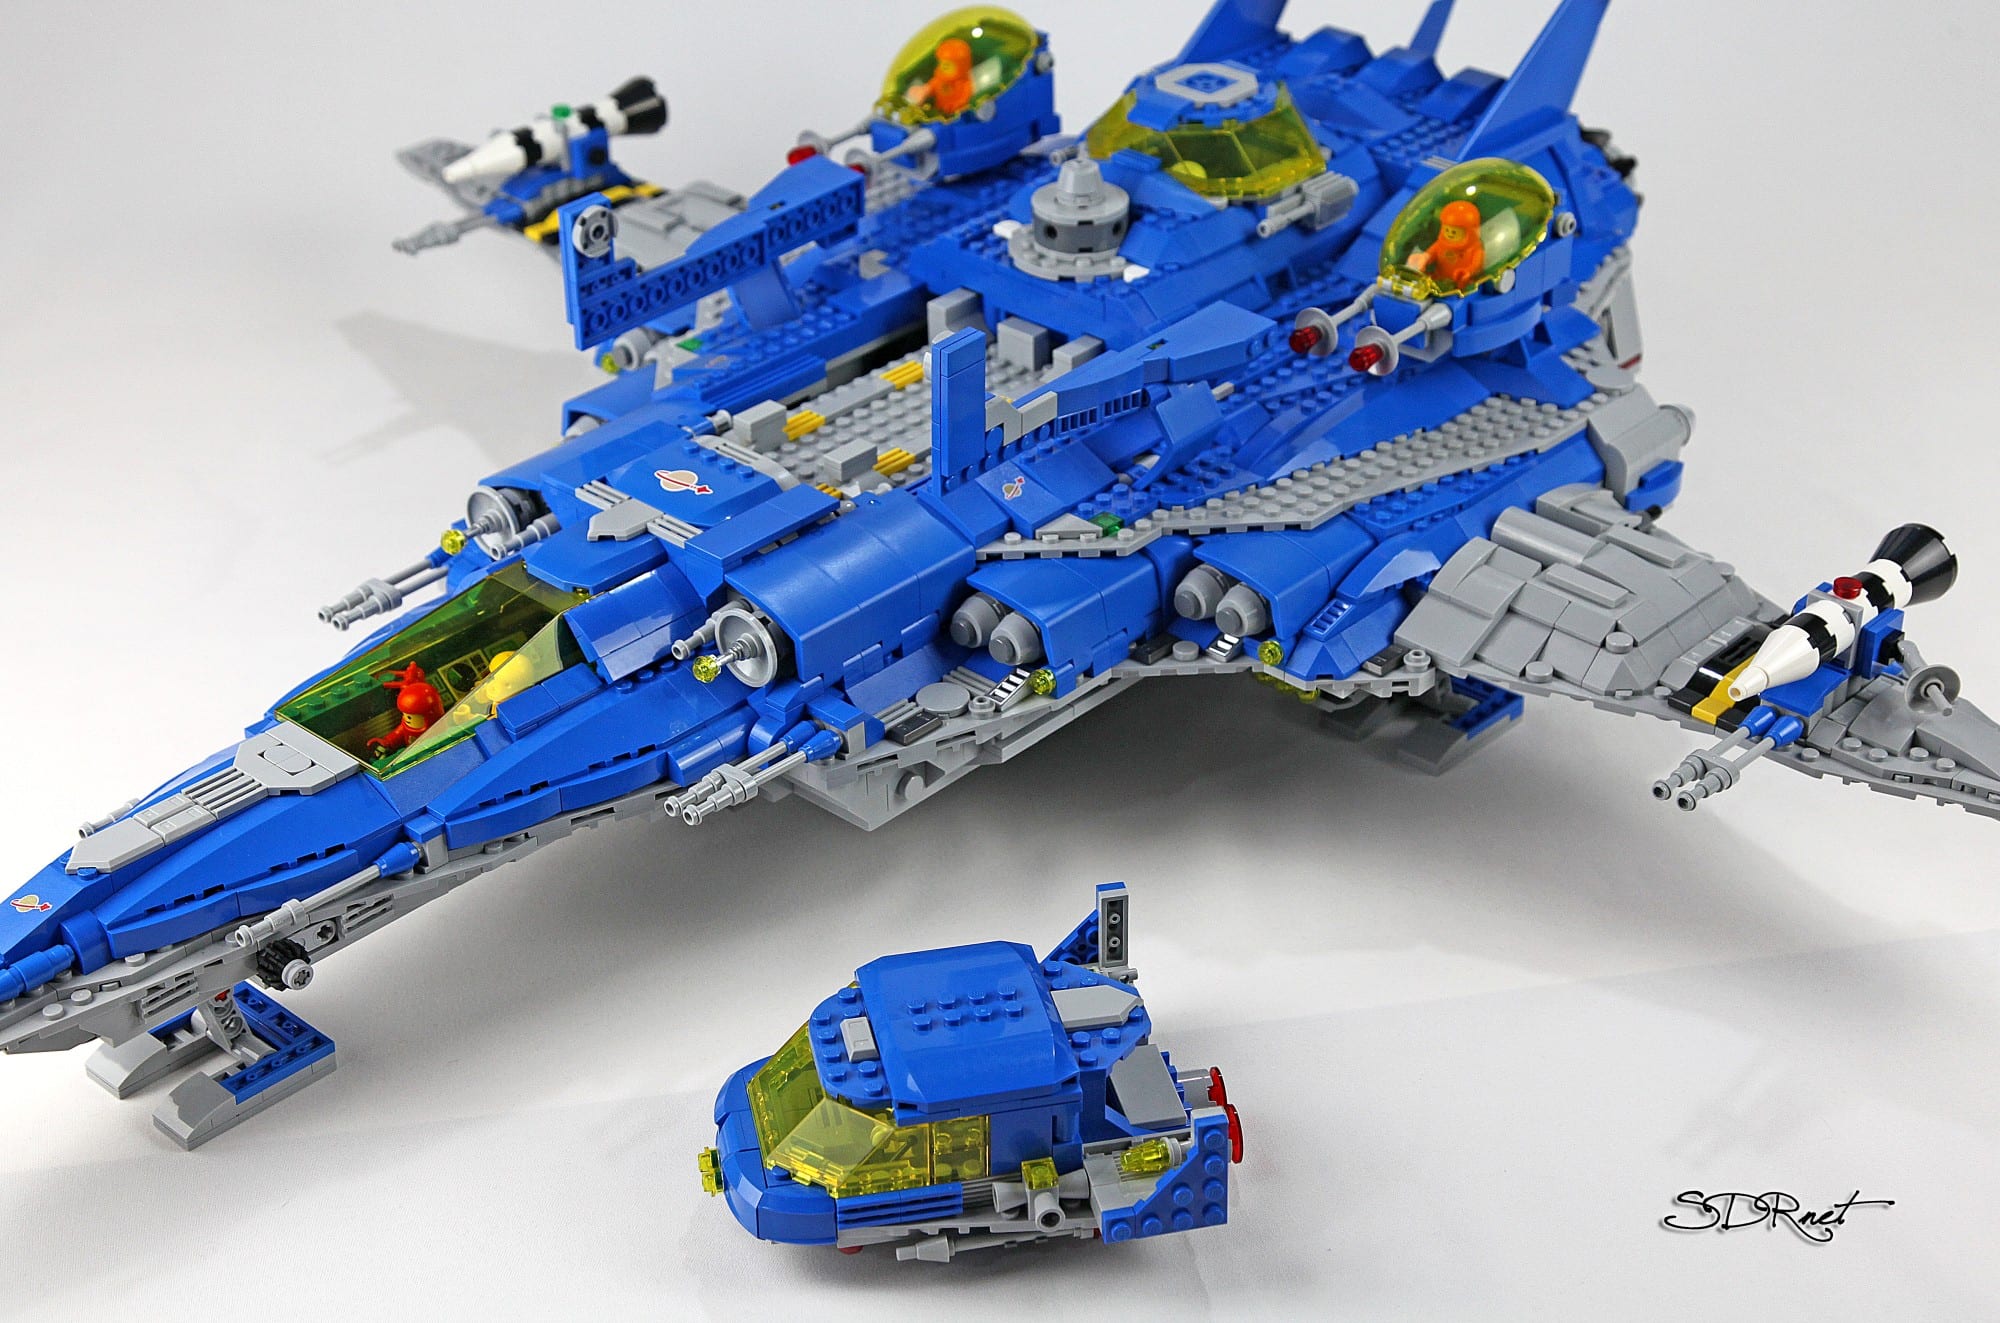 LEGO Galaxy Explorer SDR-926